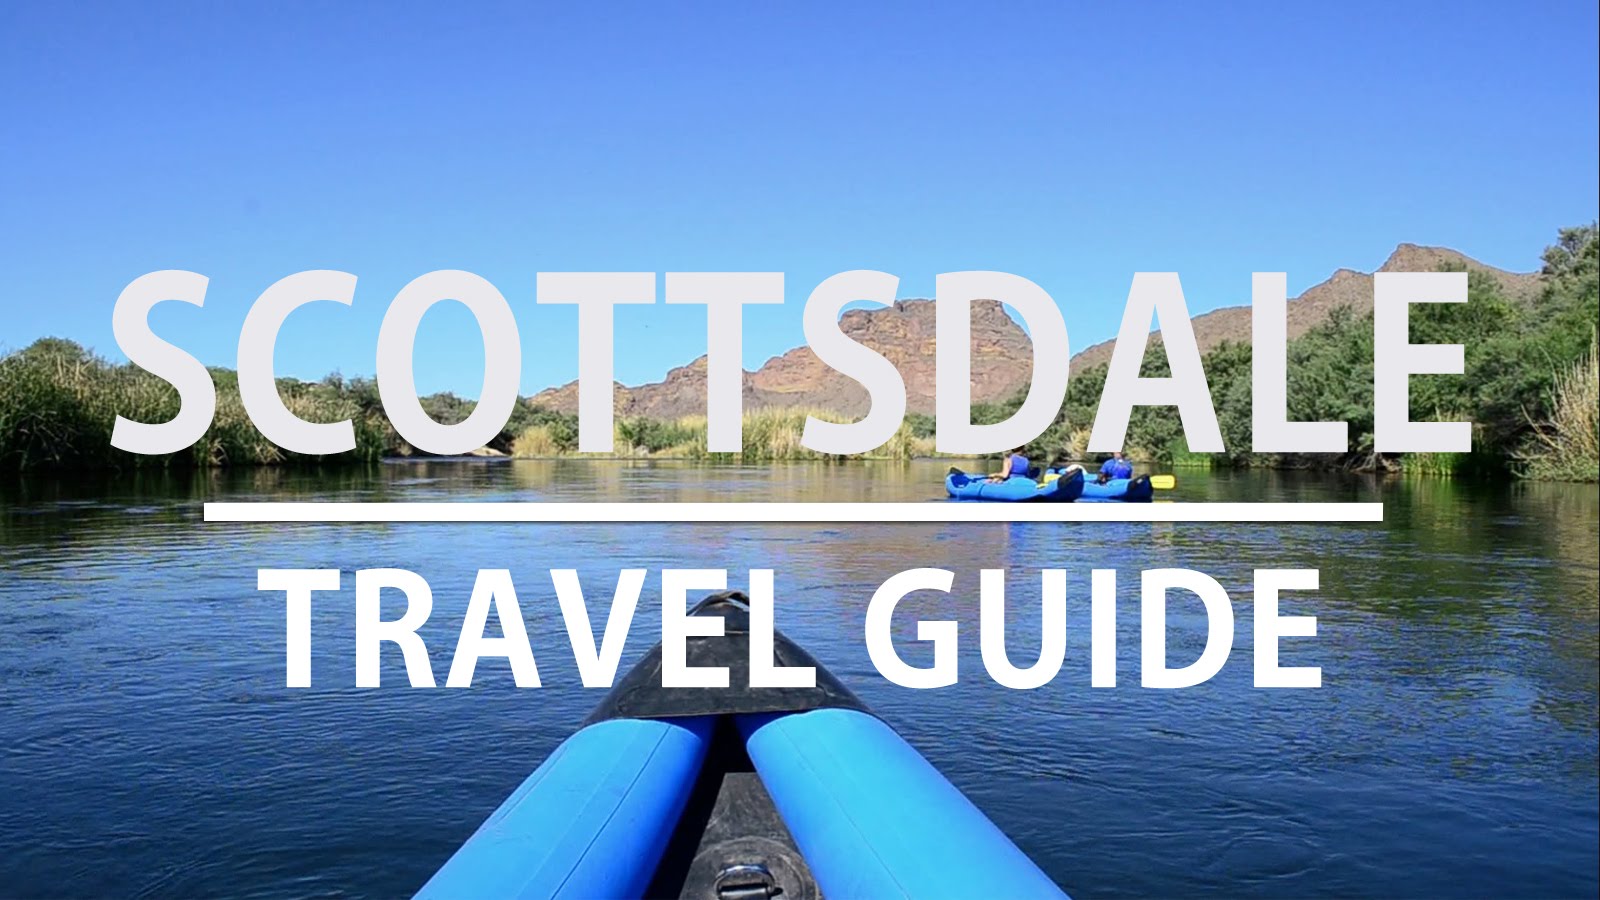 Video Travel Guide to Scottsdale, Arizona